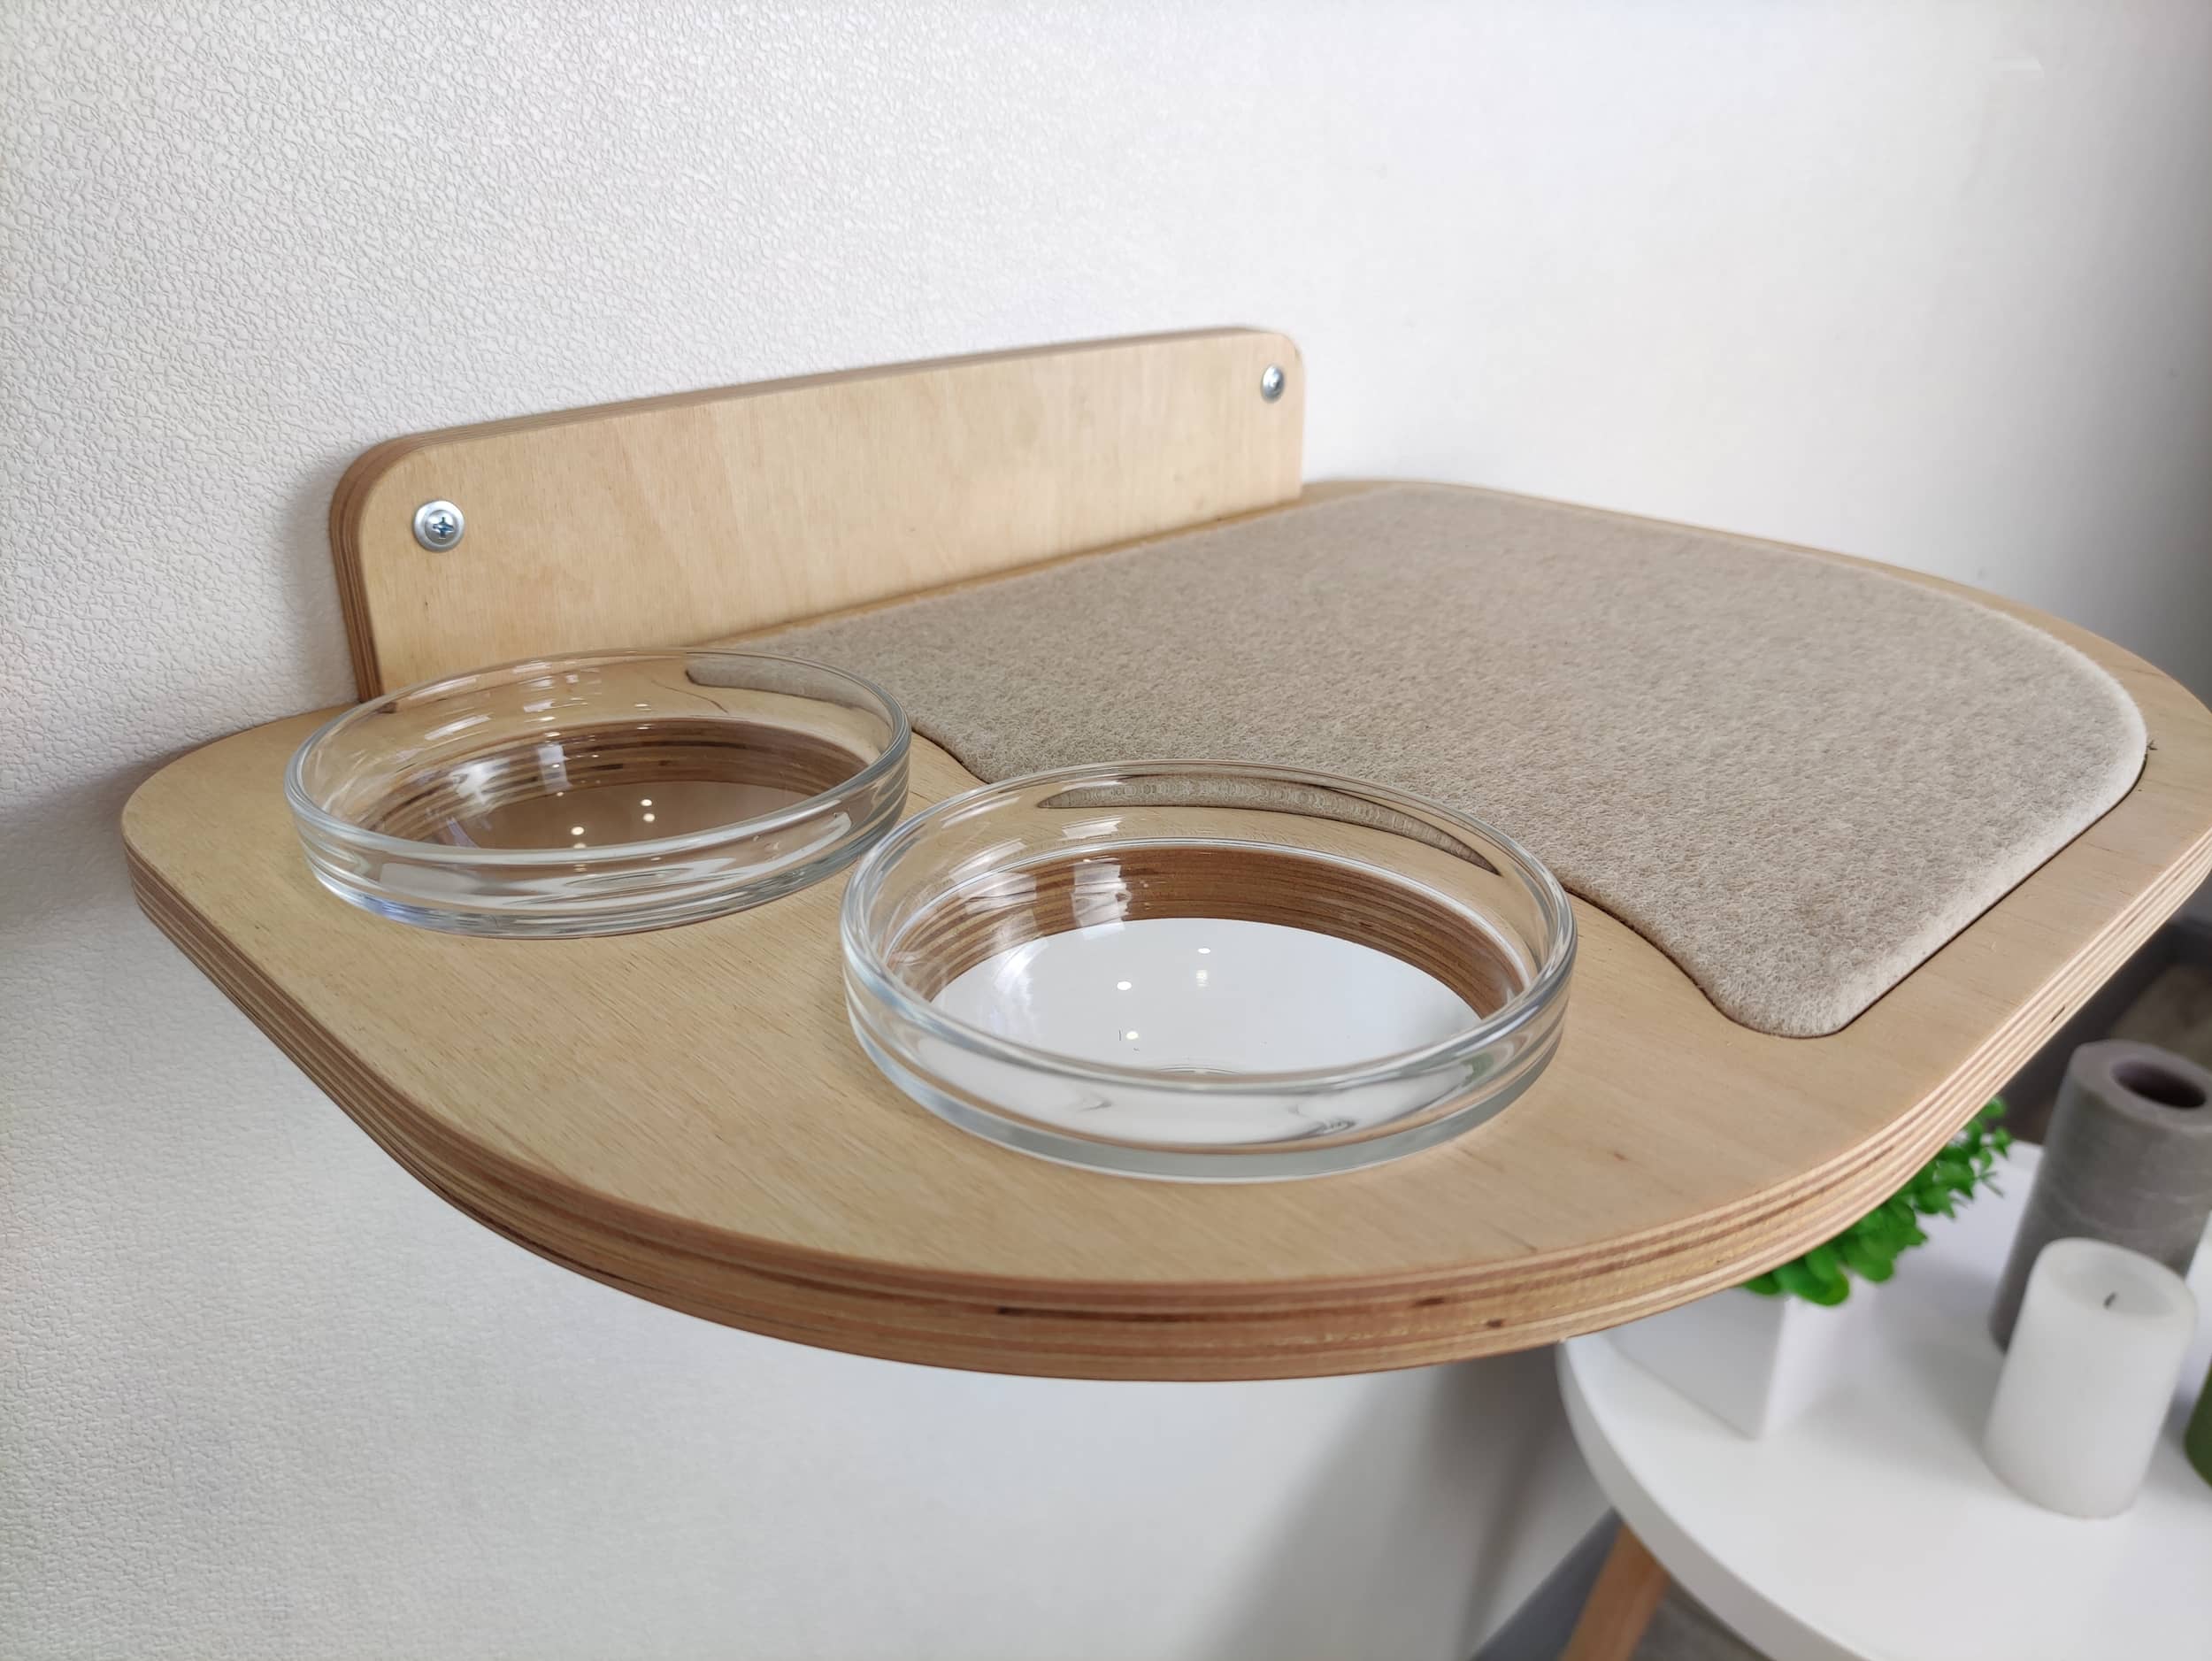 Cat feeder set - Light & double bowls